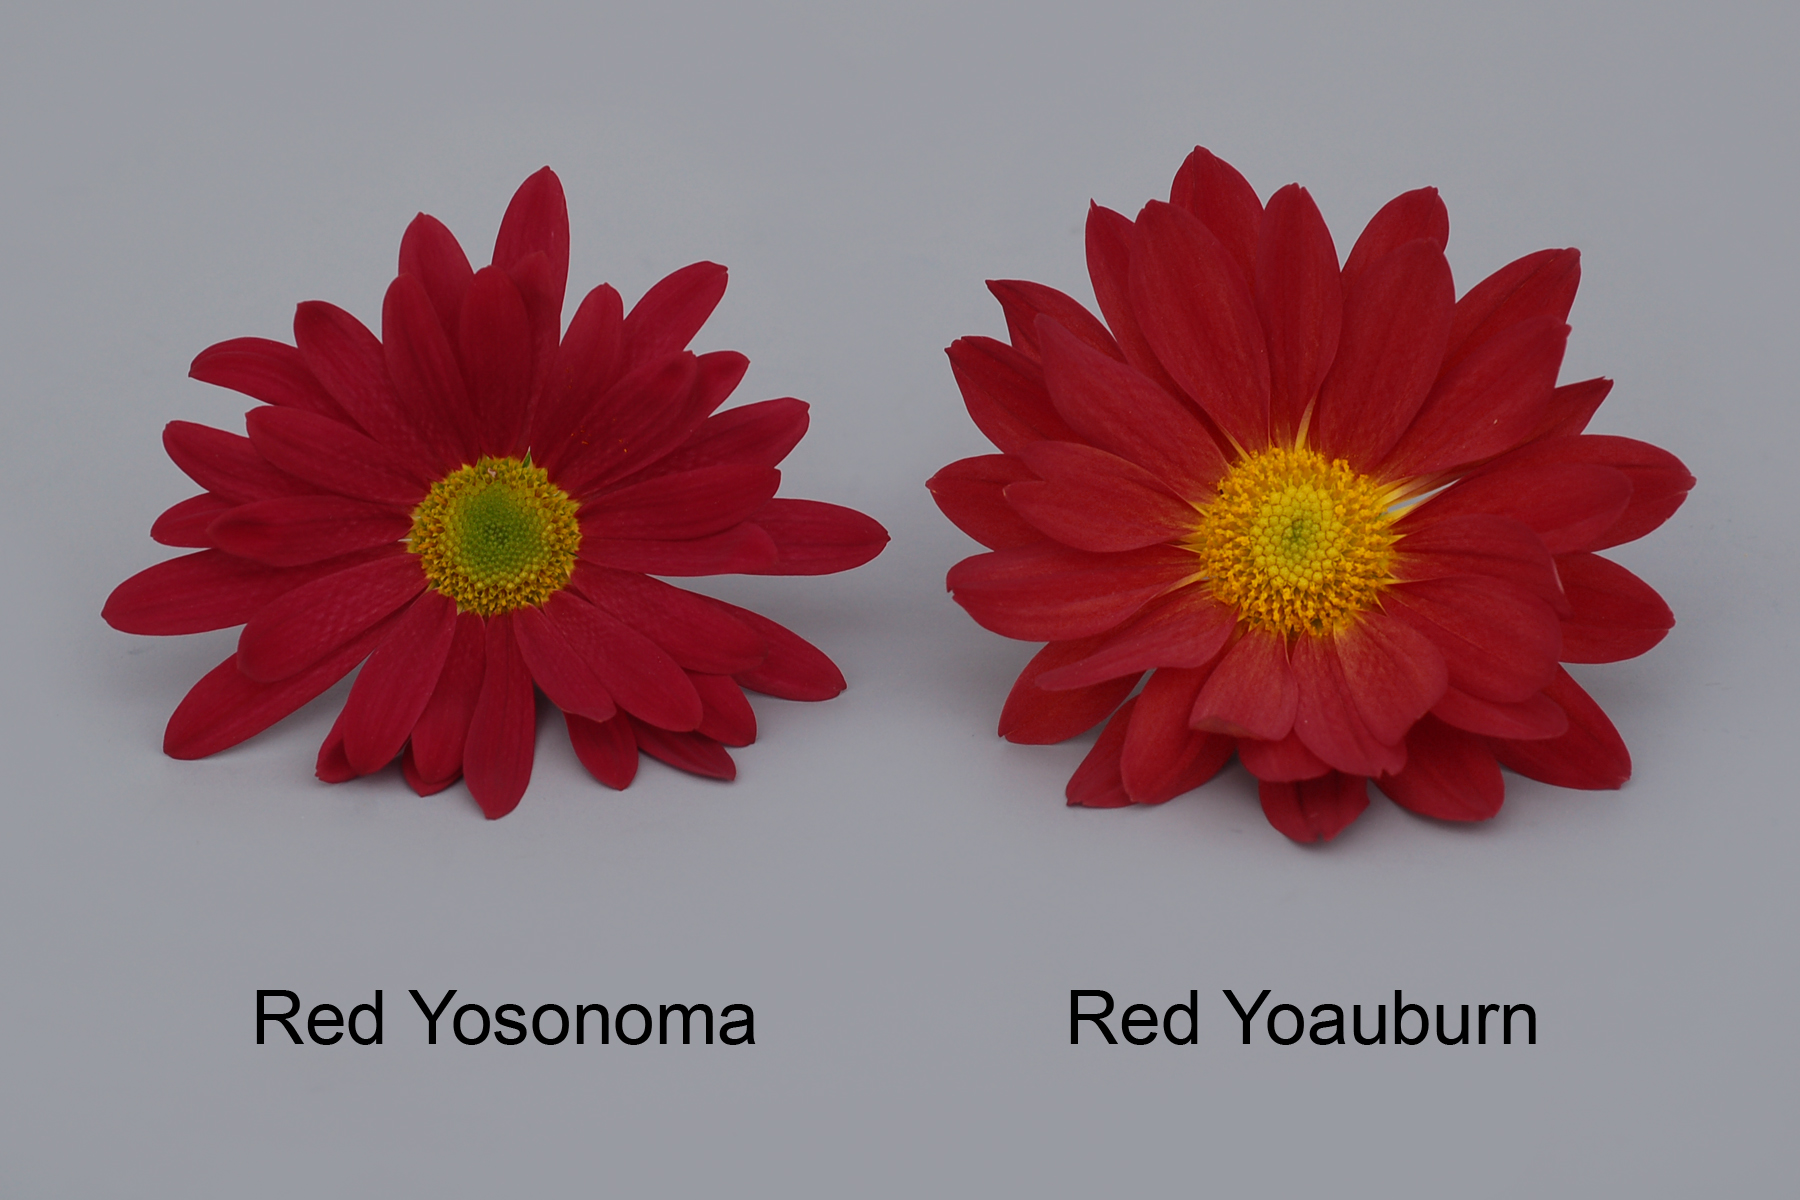 Red Yosonoma